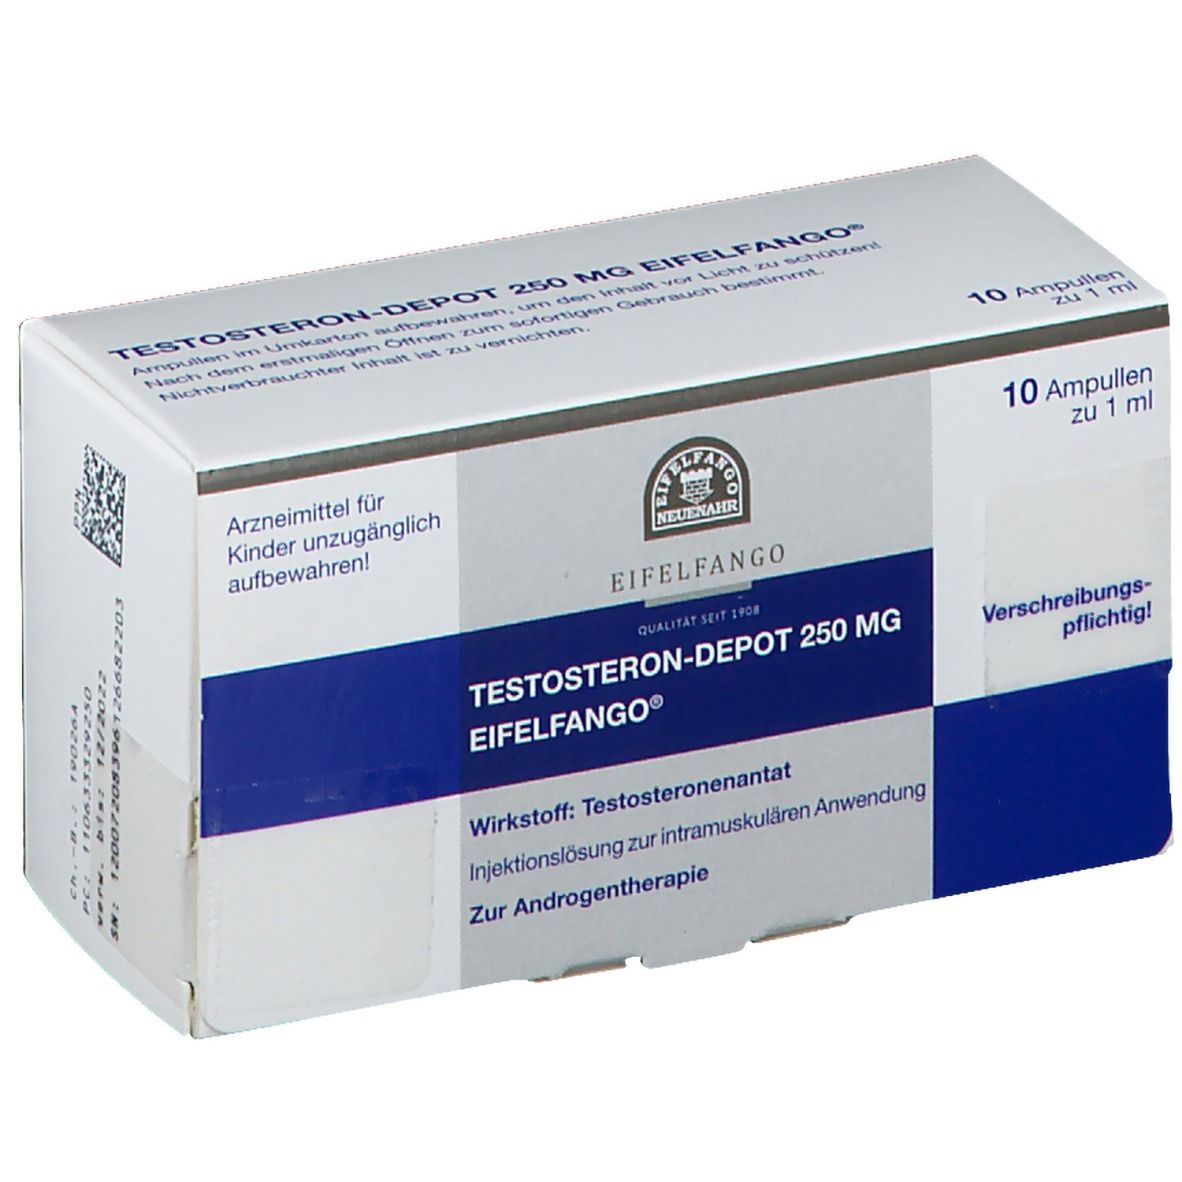 TESTOSTERON-DEPOT 250 mg EIFELFANGO® 10x1 ml